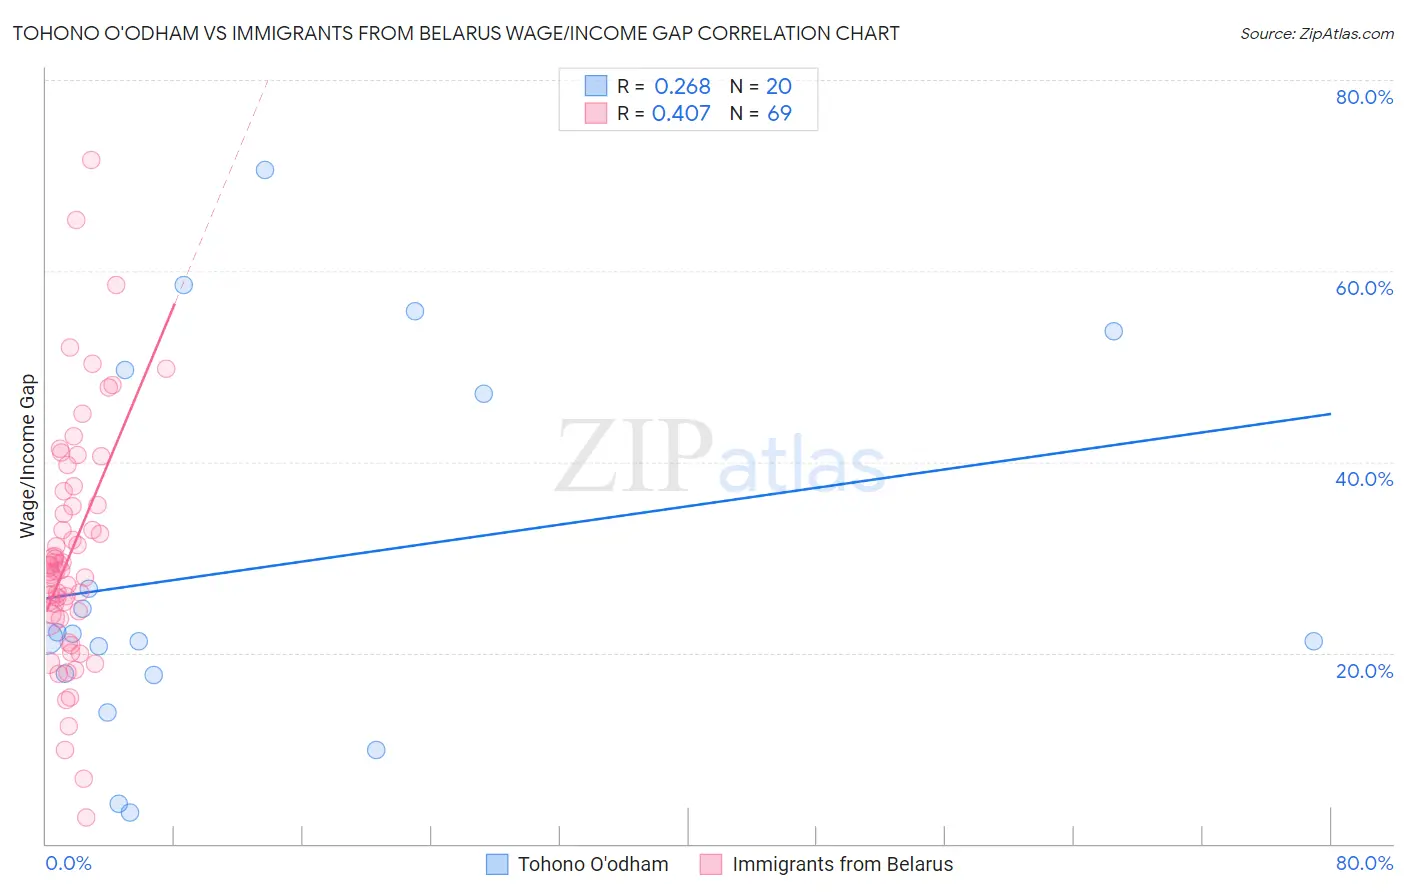 Tohono O'odham vs Immigrants from Belarus Wage/Income Gap